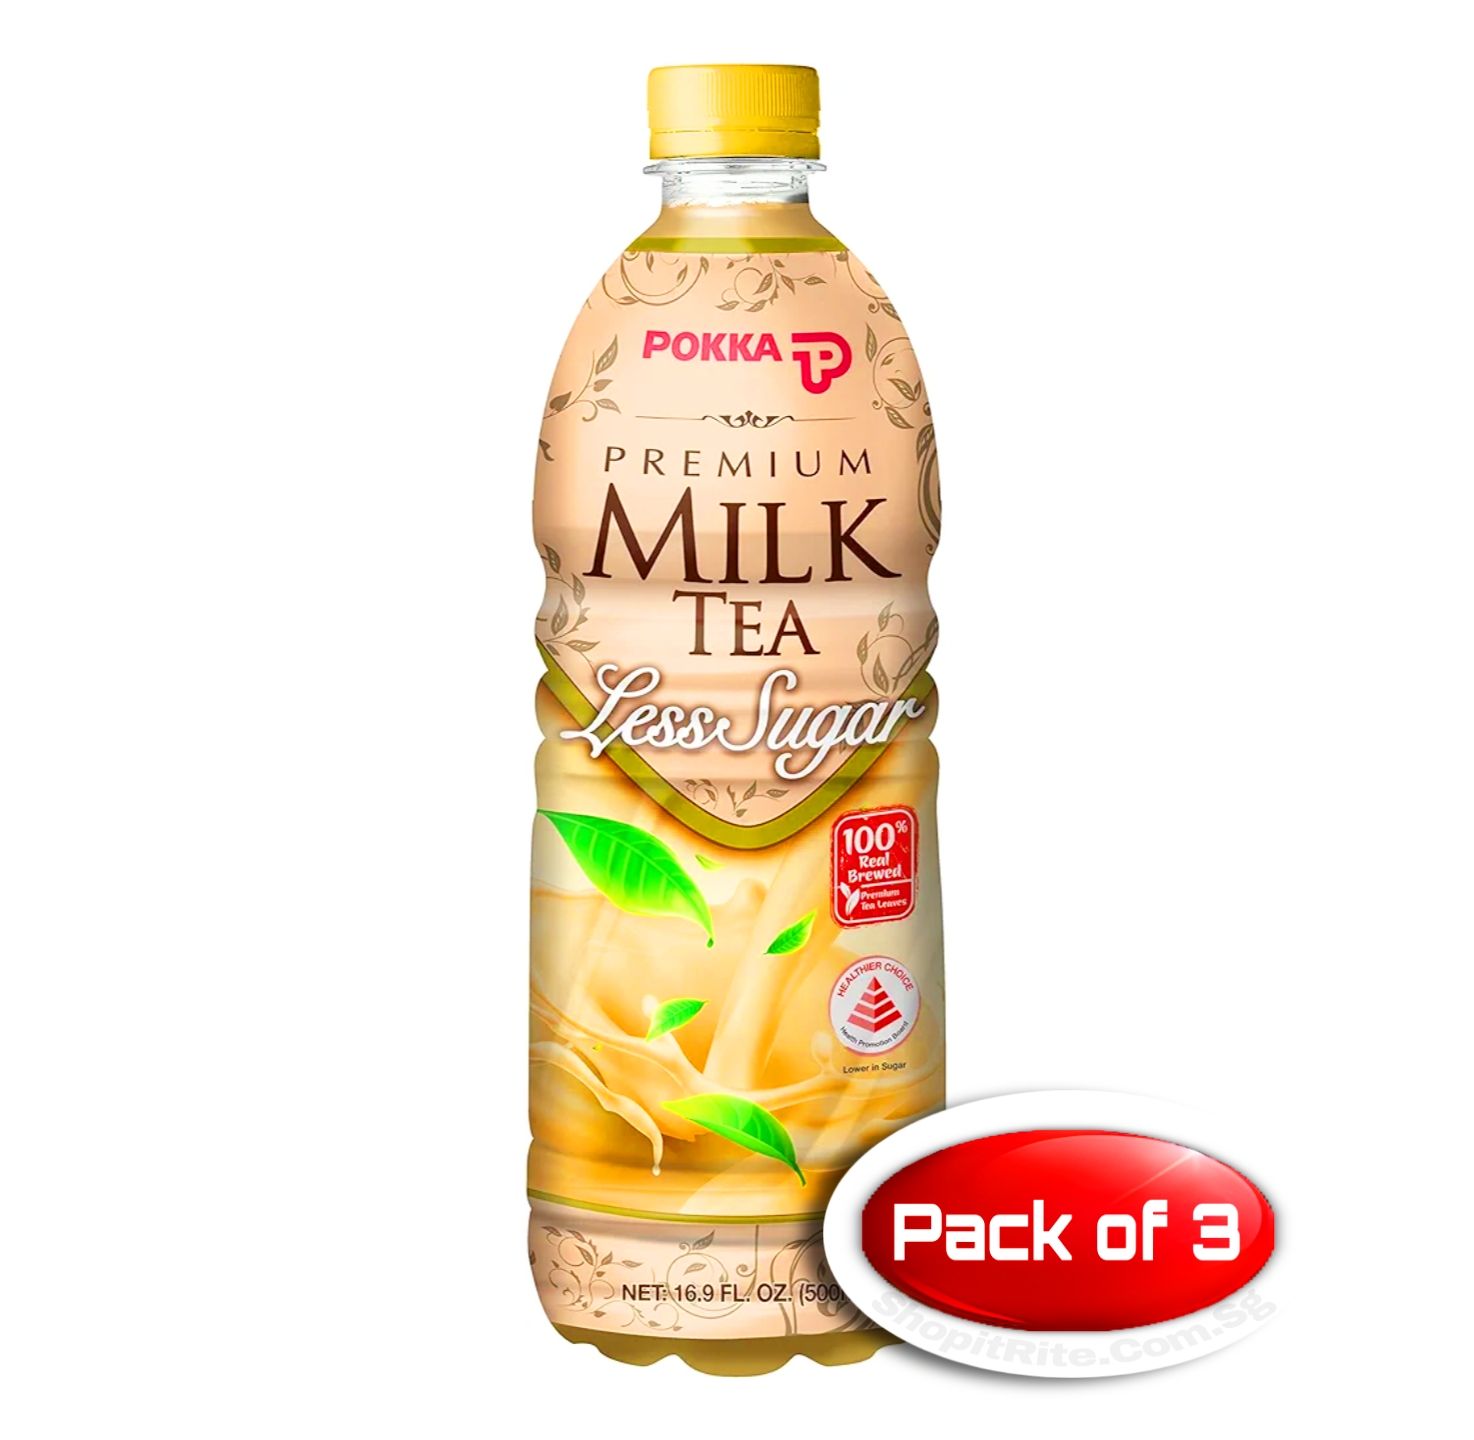 Pokka Premium Milk Tea Less Sugar 500mL 3 Bottles